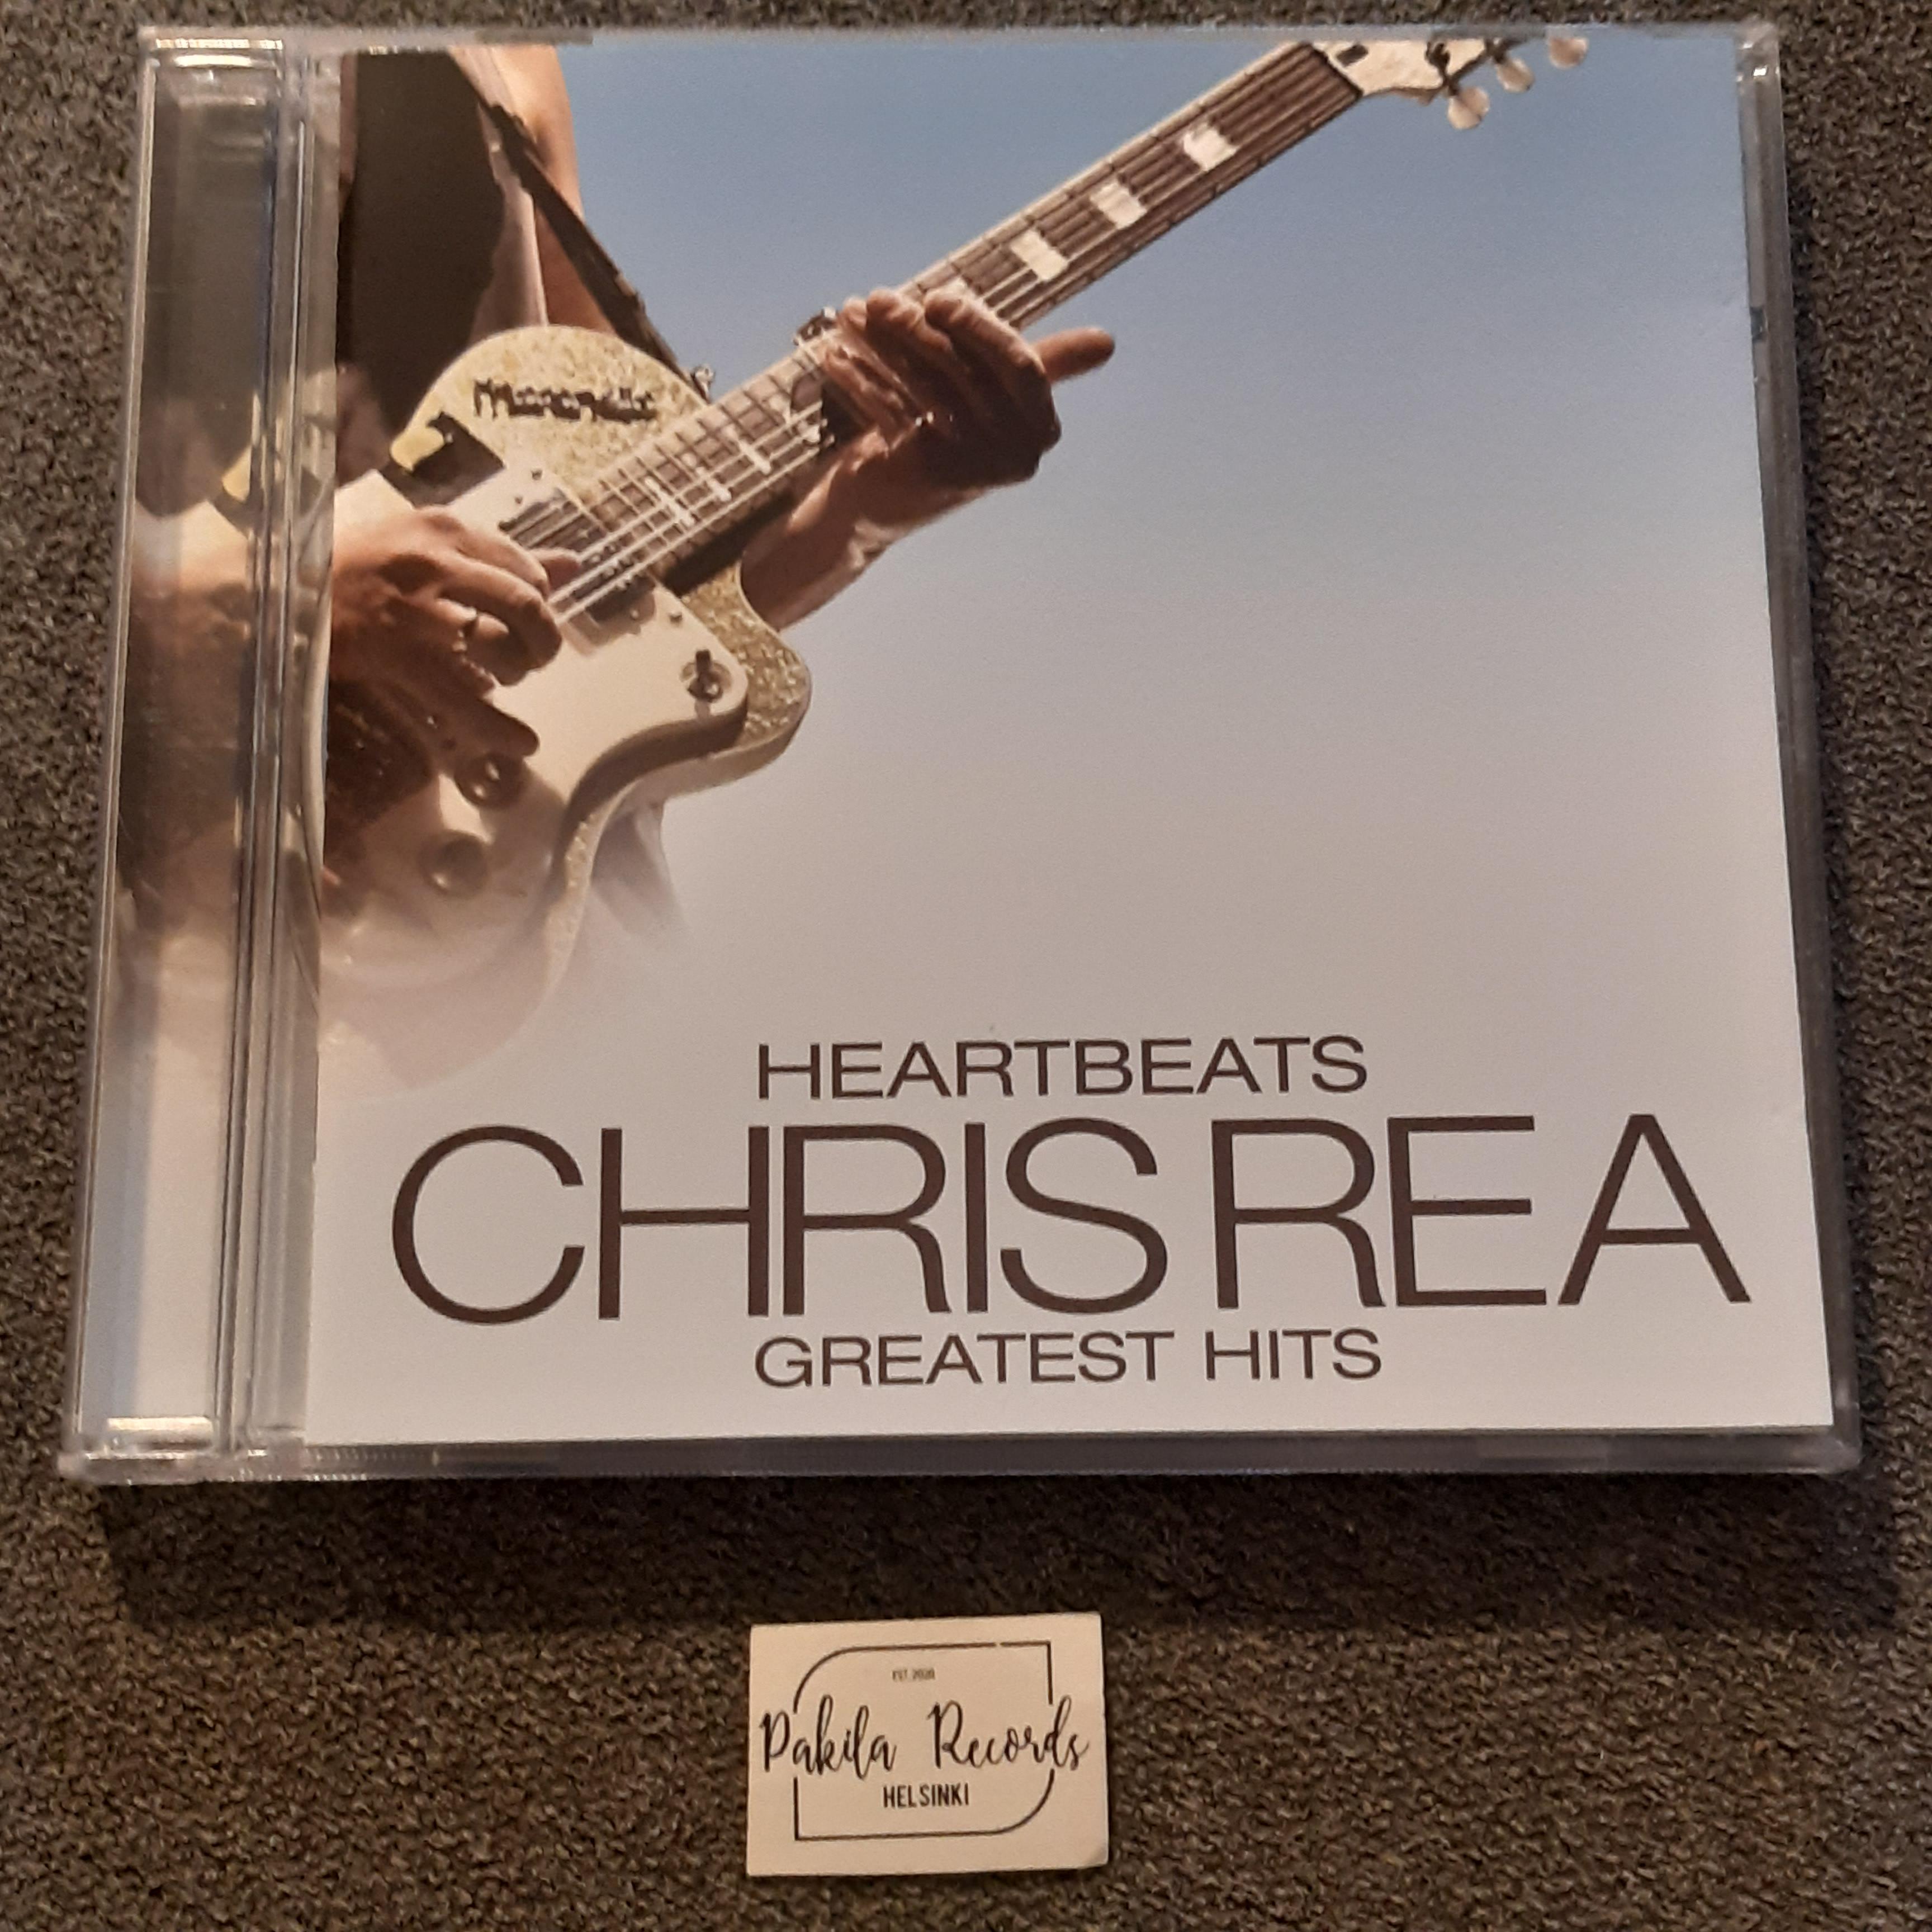 Chris Rea - Heartbeats, Greatest Hits - CD (käytetty)